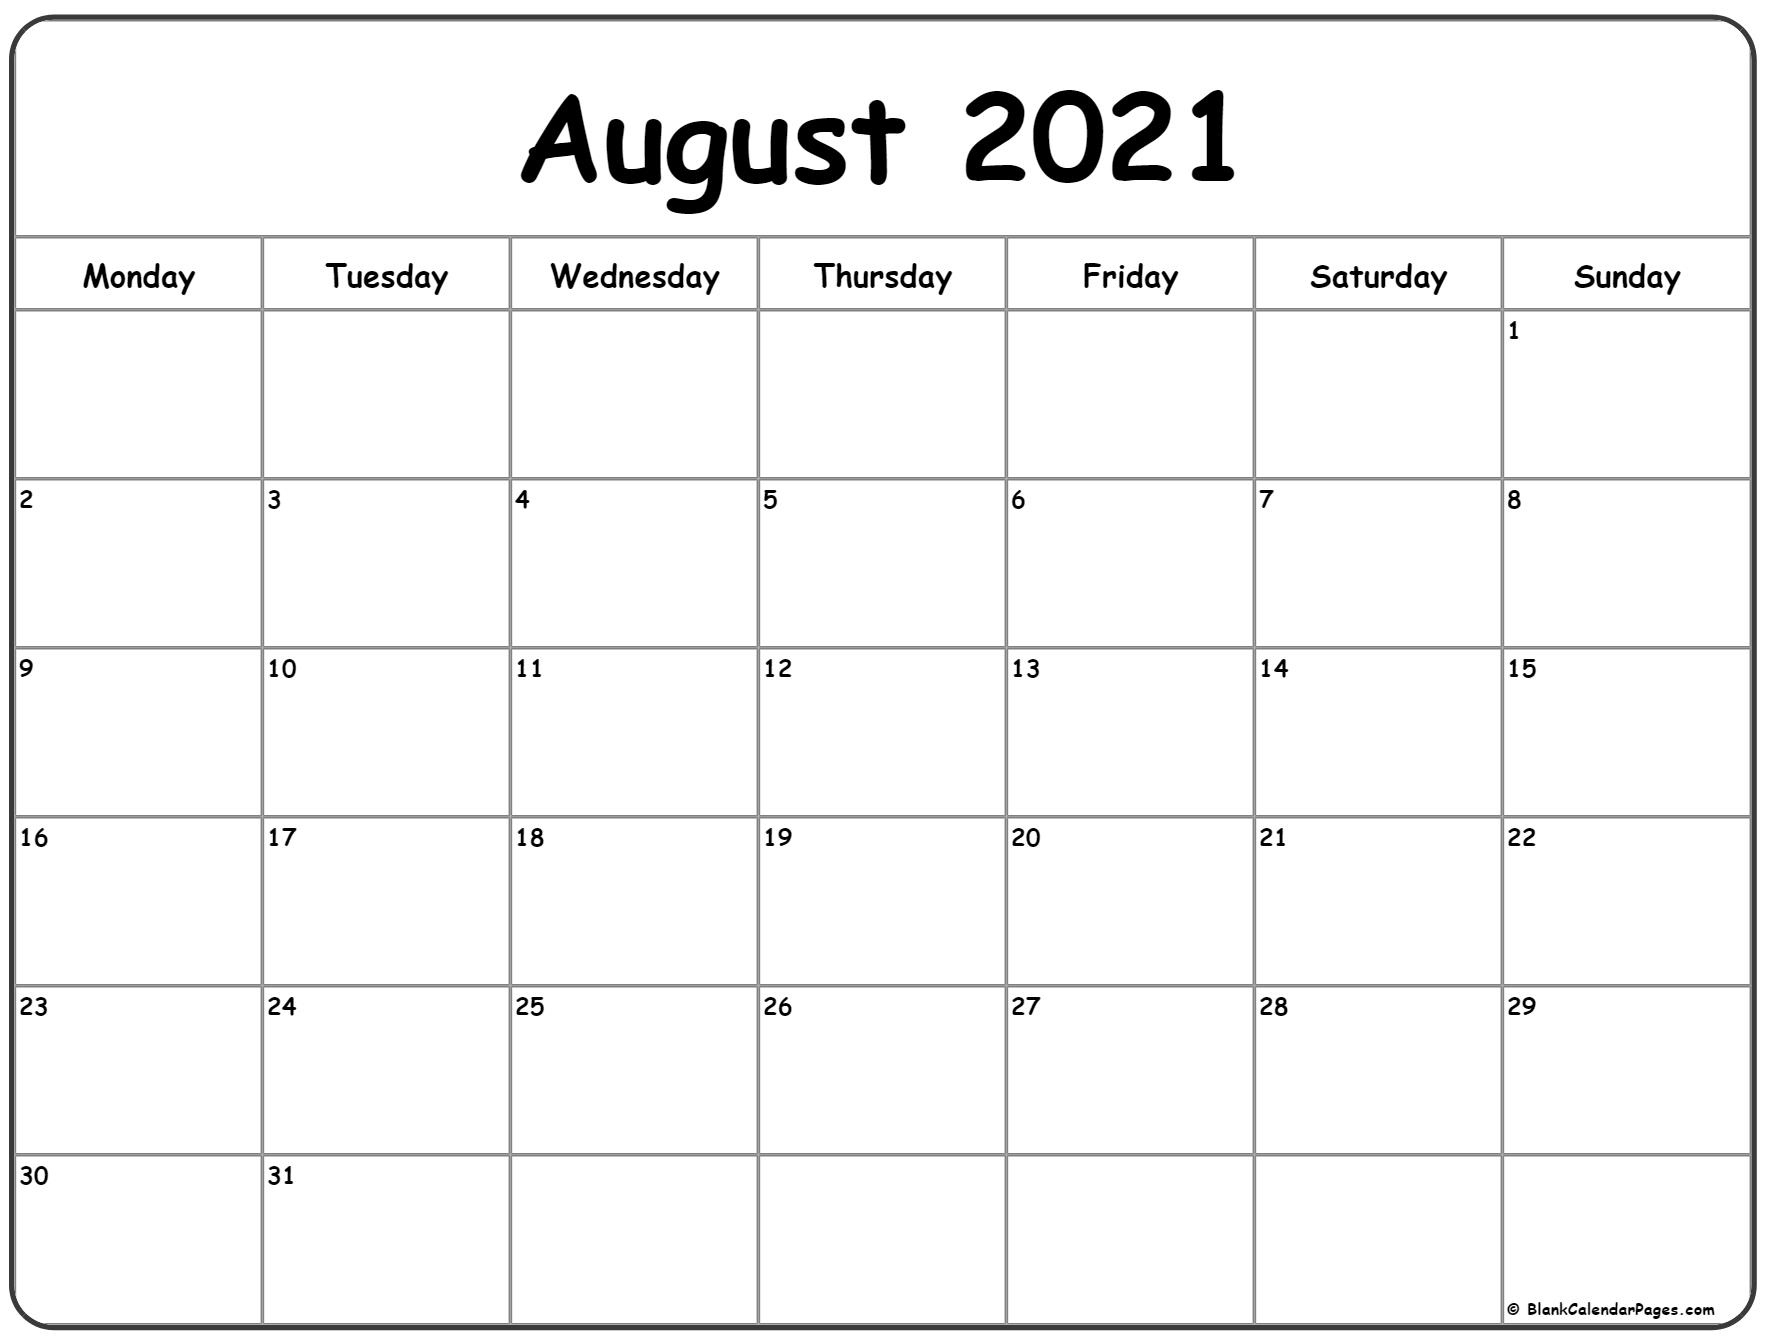 August 2021 Calendar With Holidays | Printable Calendars 2021 Free Printable August 2021 Calendar With Holidays